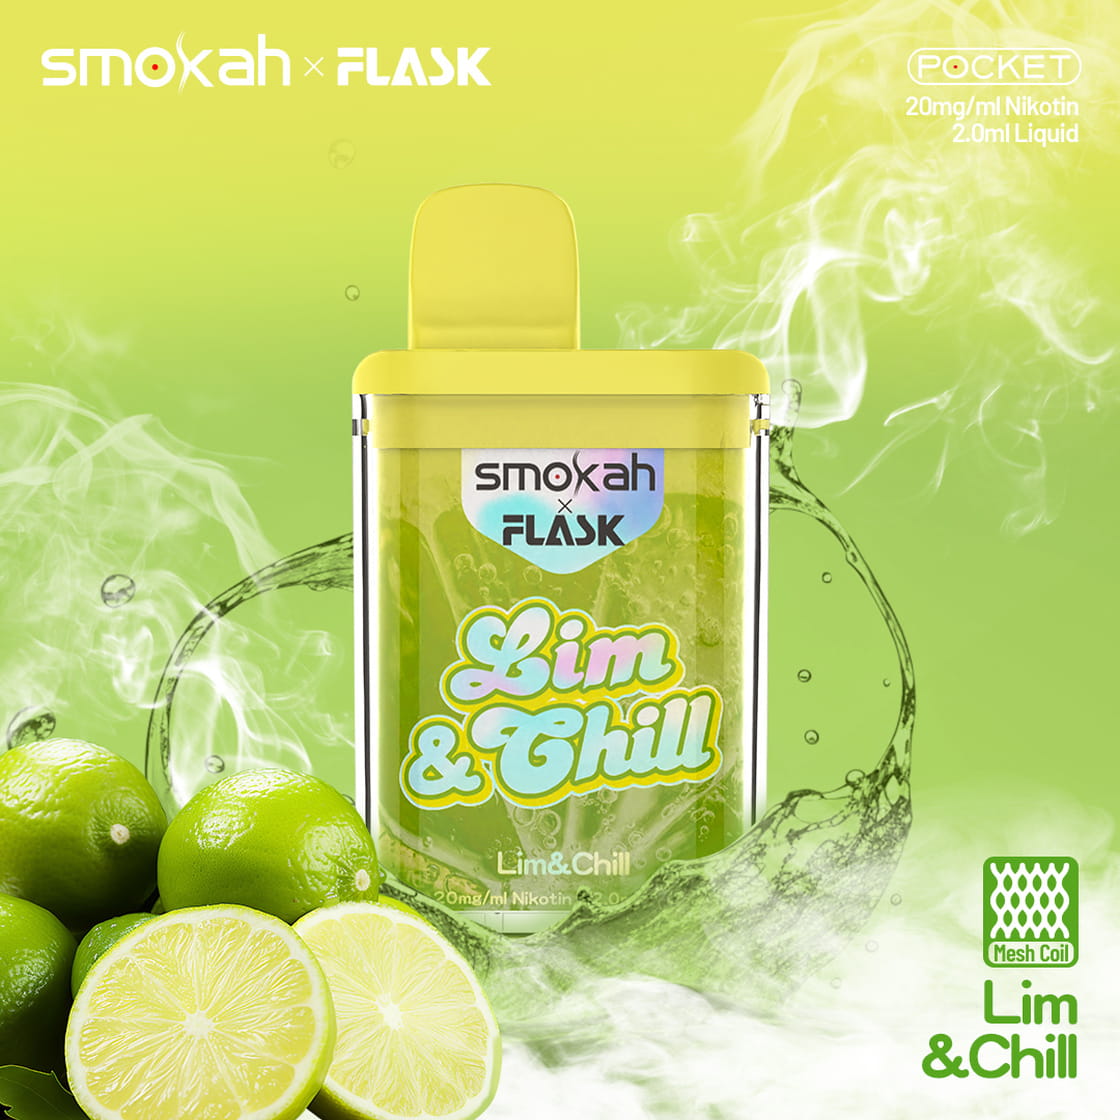 Smokah x Flask Pocket Lim & Chill